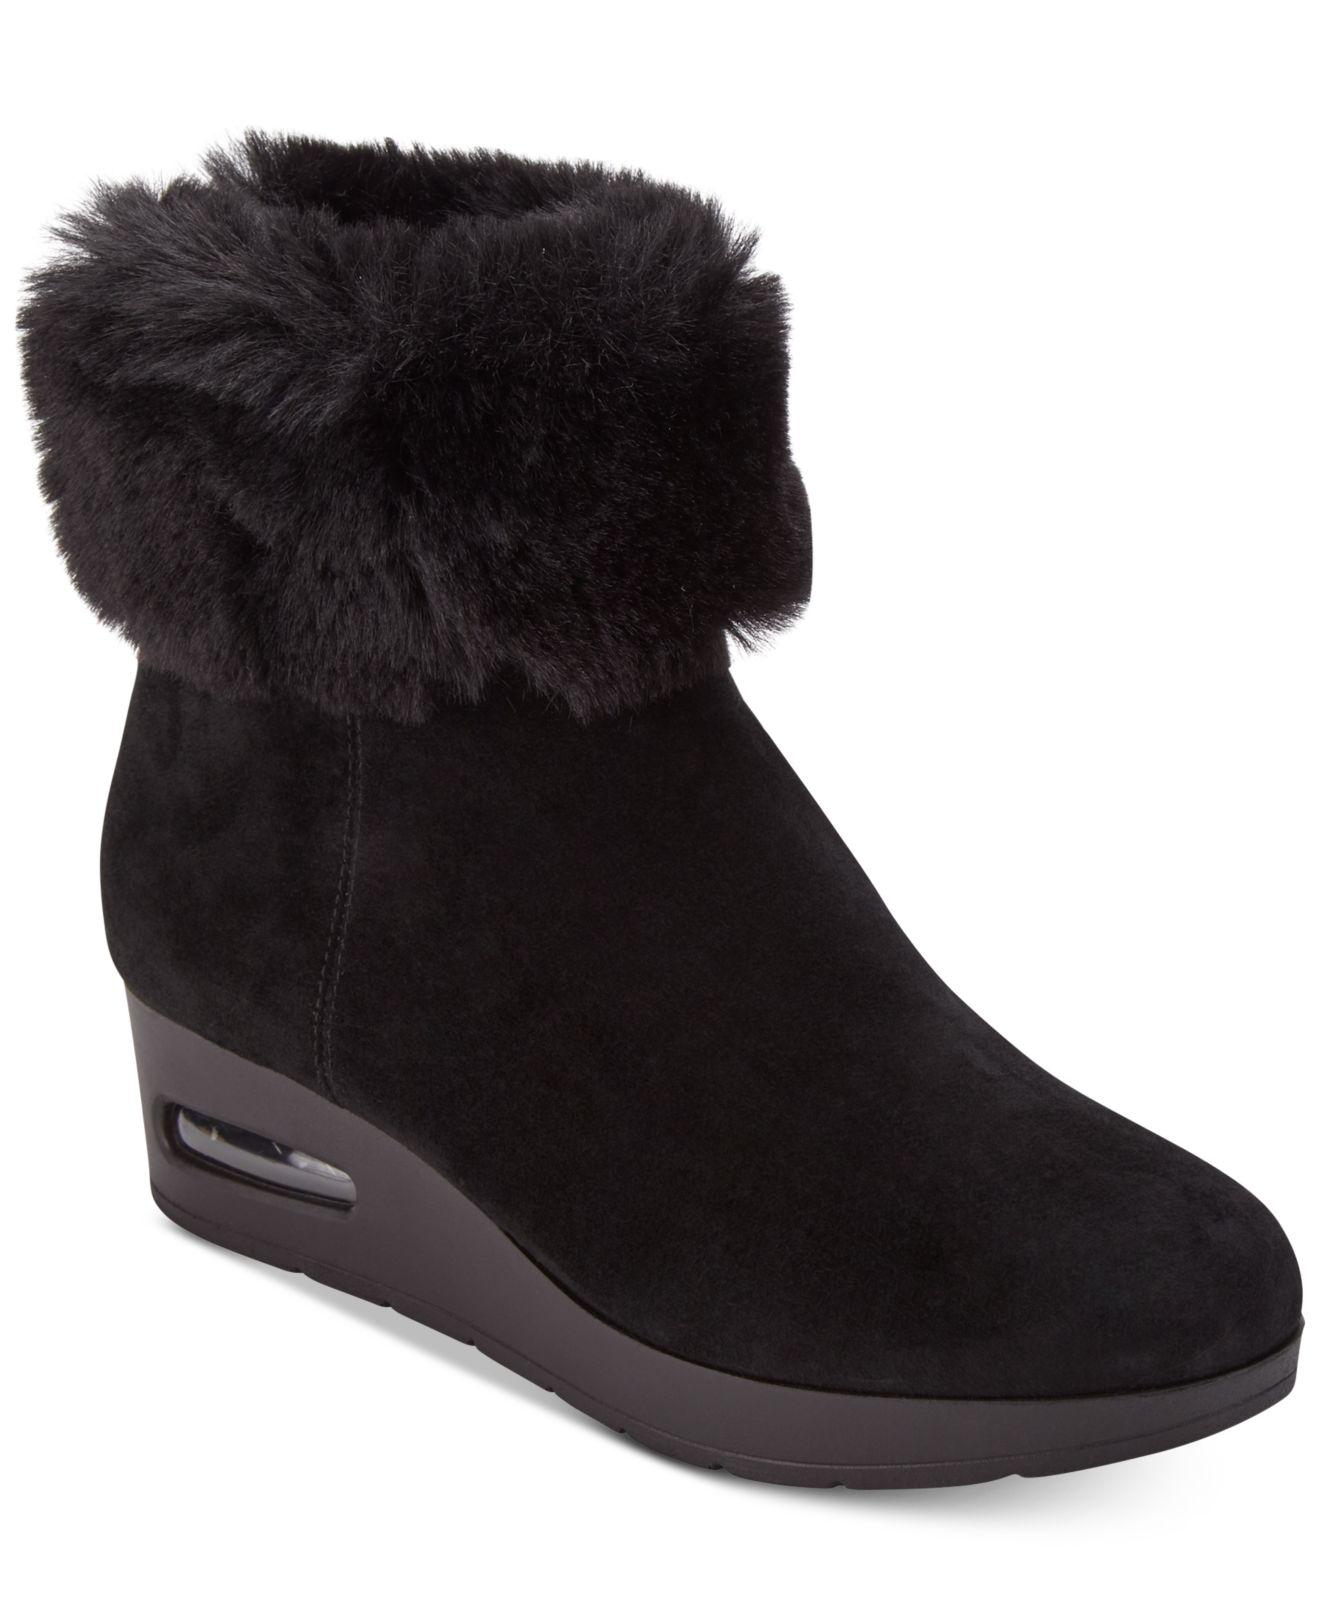 DKNY Womens Abri Faux Fur Round Toe Ankle Fashion Boots, Black, Size 9. ...